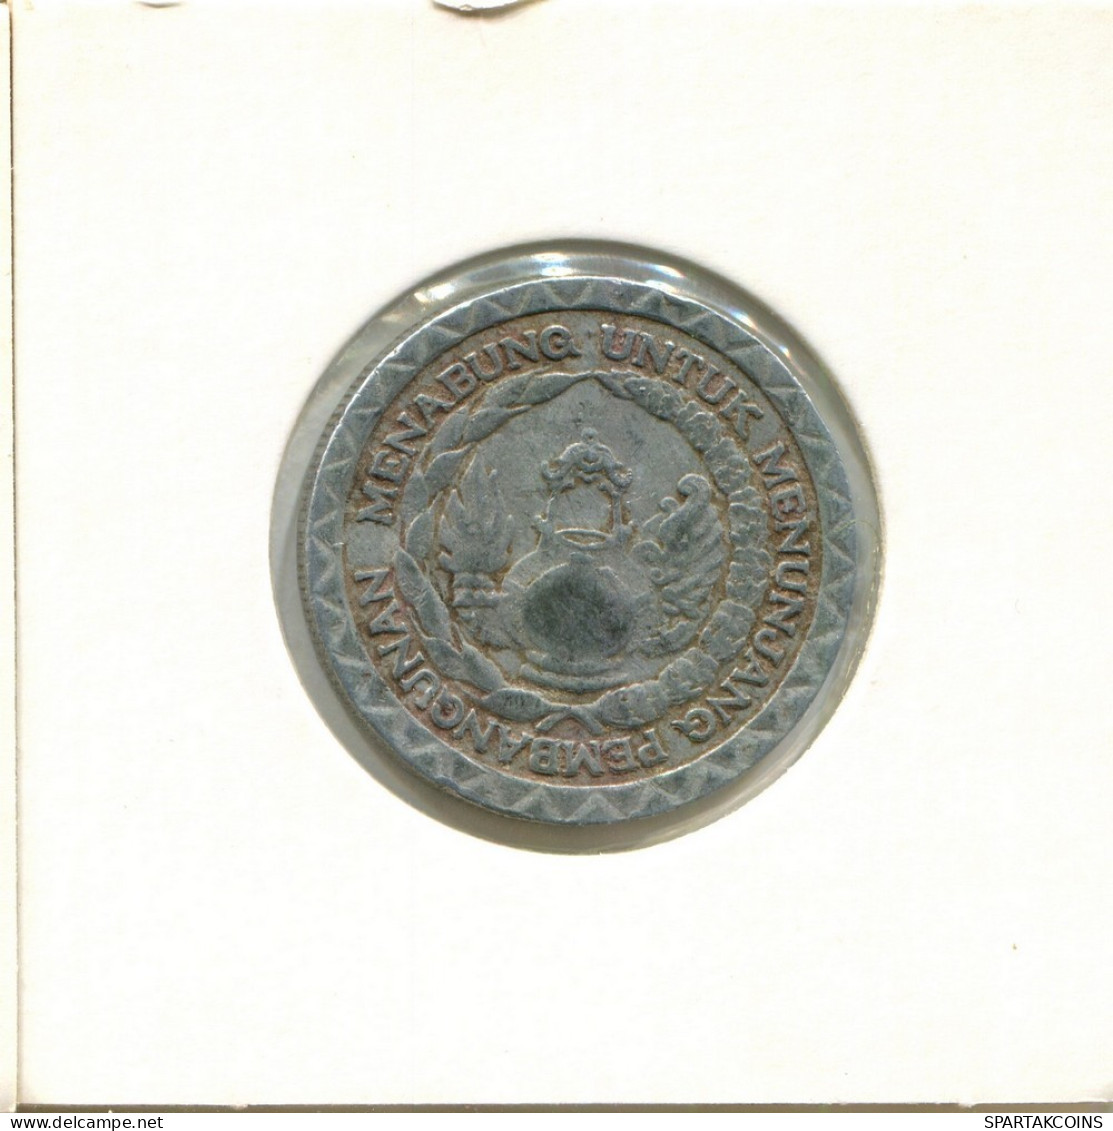 10 RUPIAH 1979 INDONESIA Coin #AY868.U.A - Indonesien